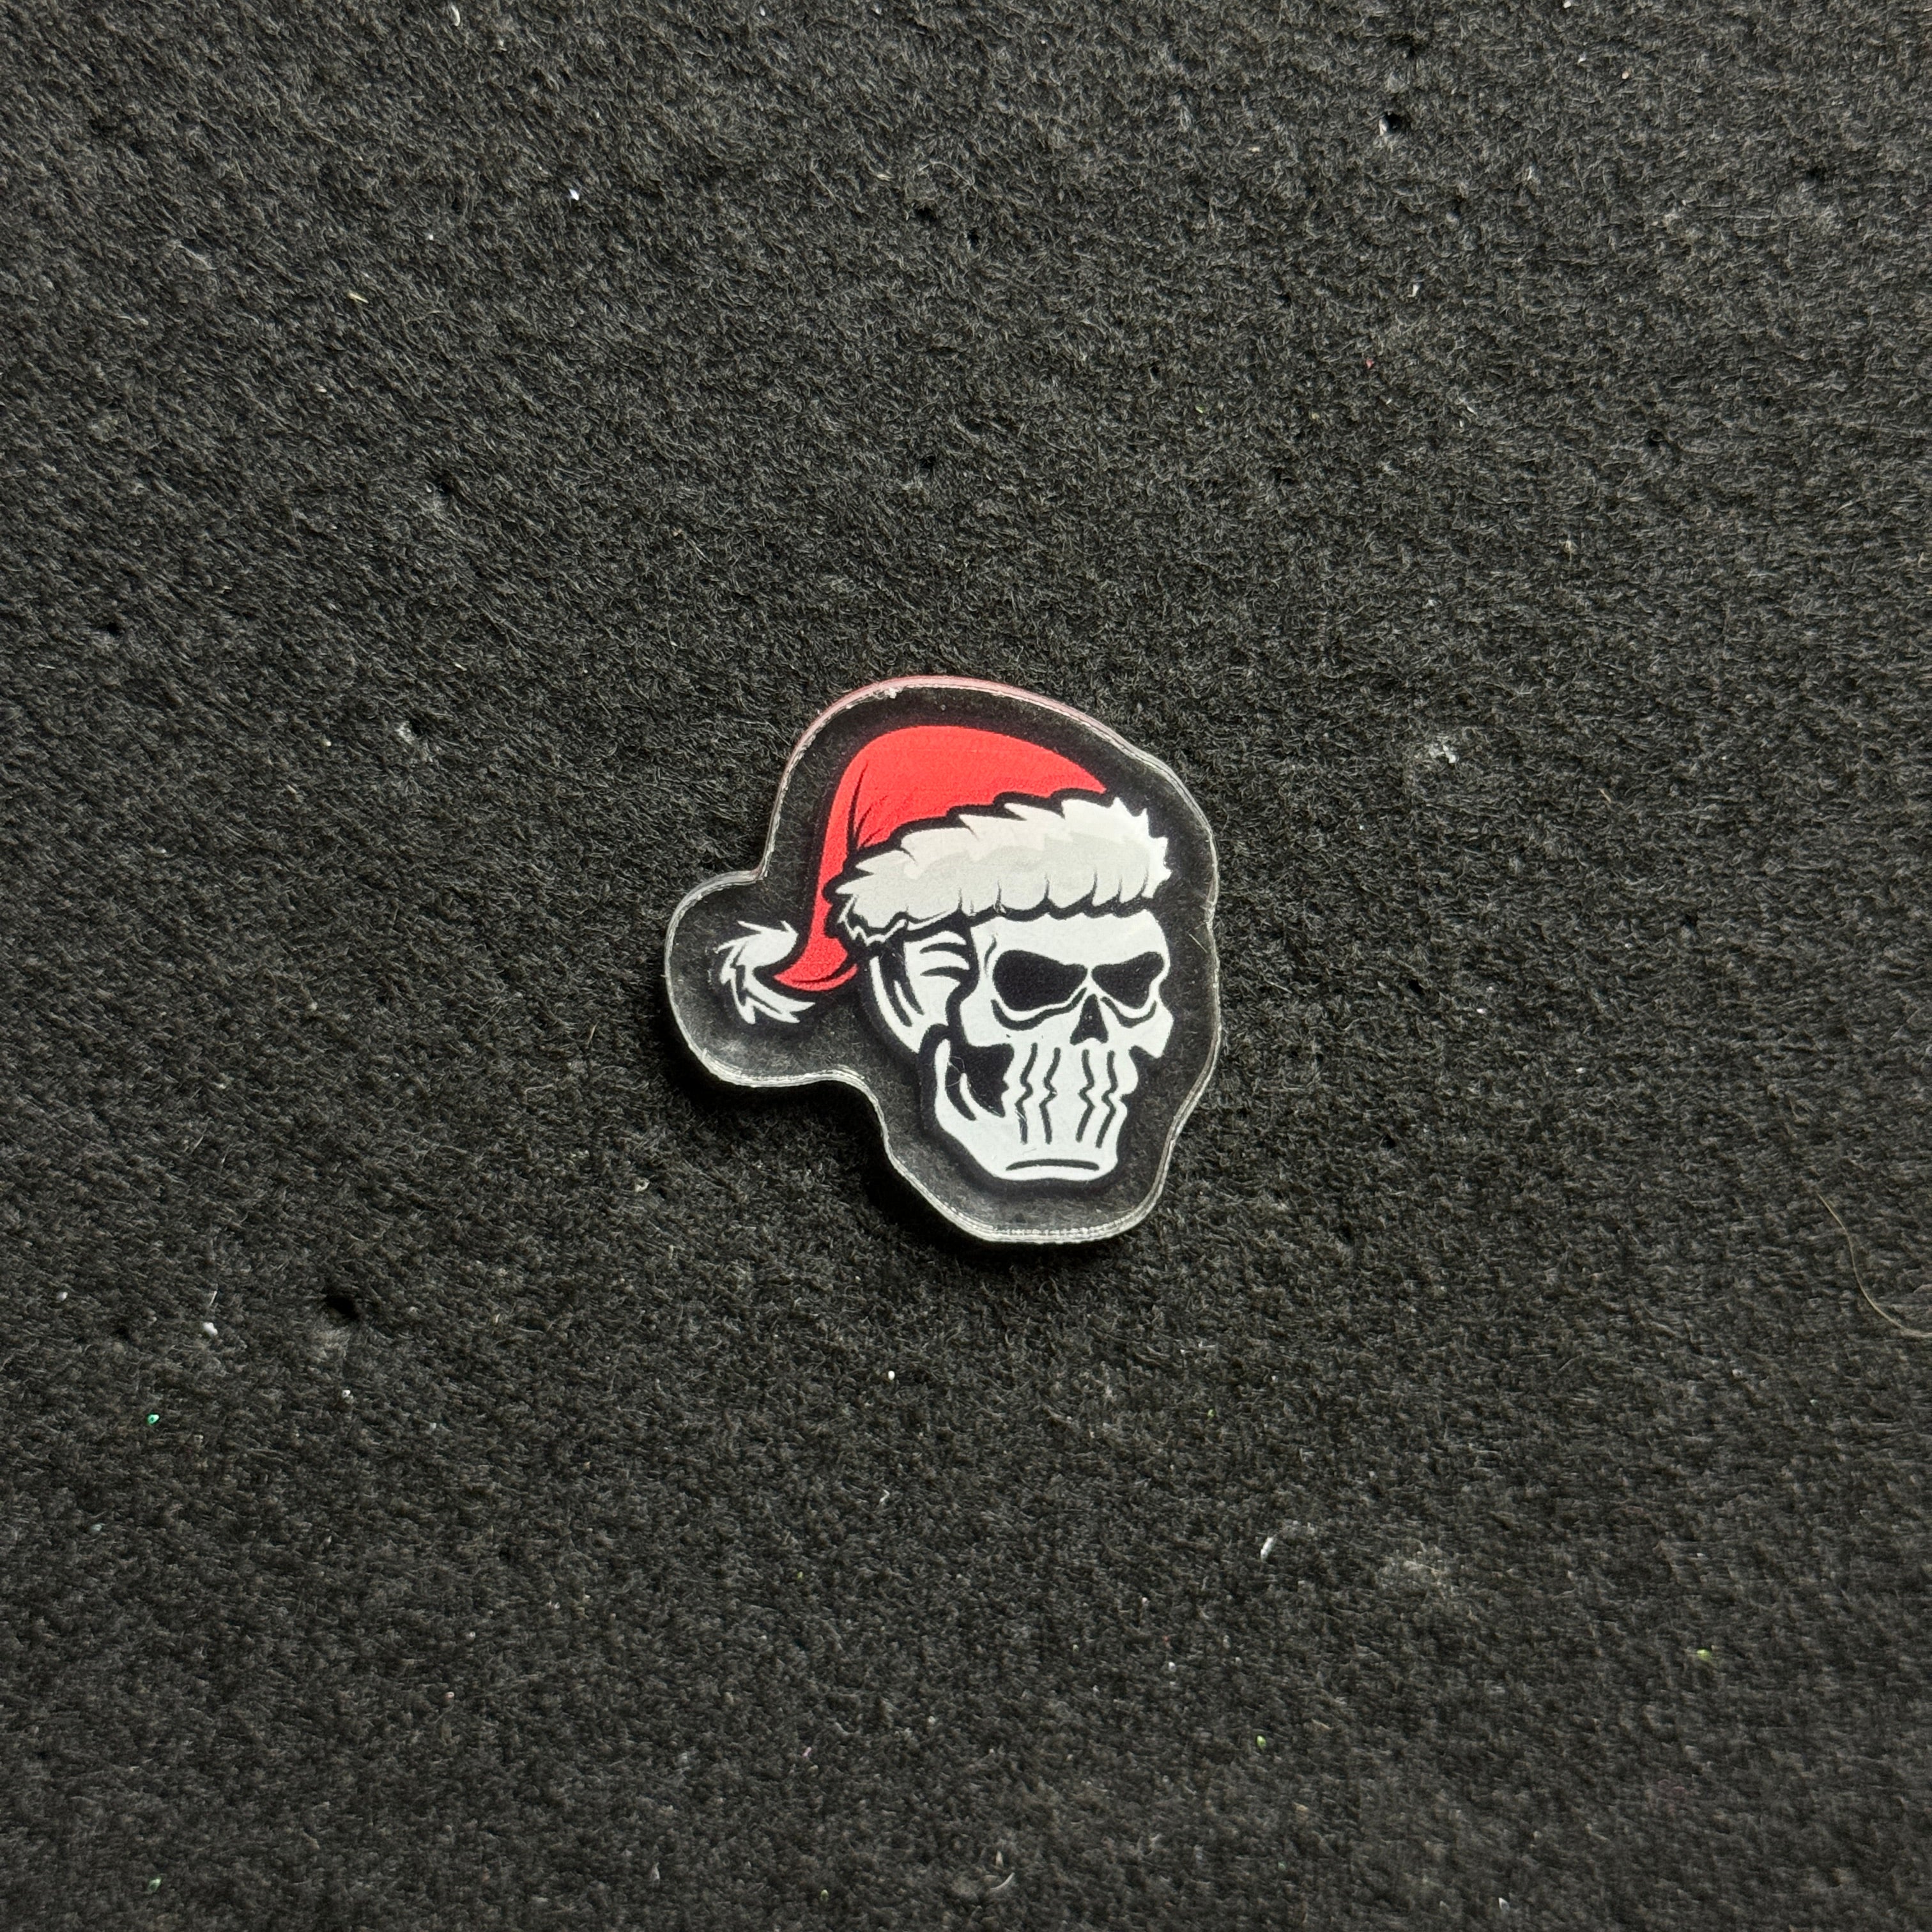 Acrylic Santa Skull Graphic Pin